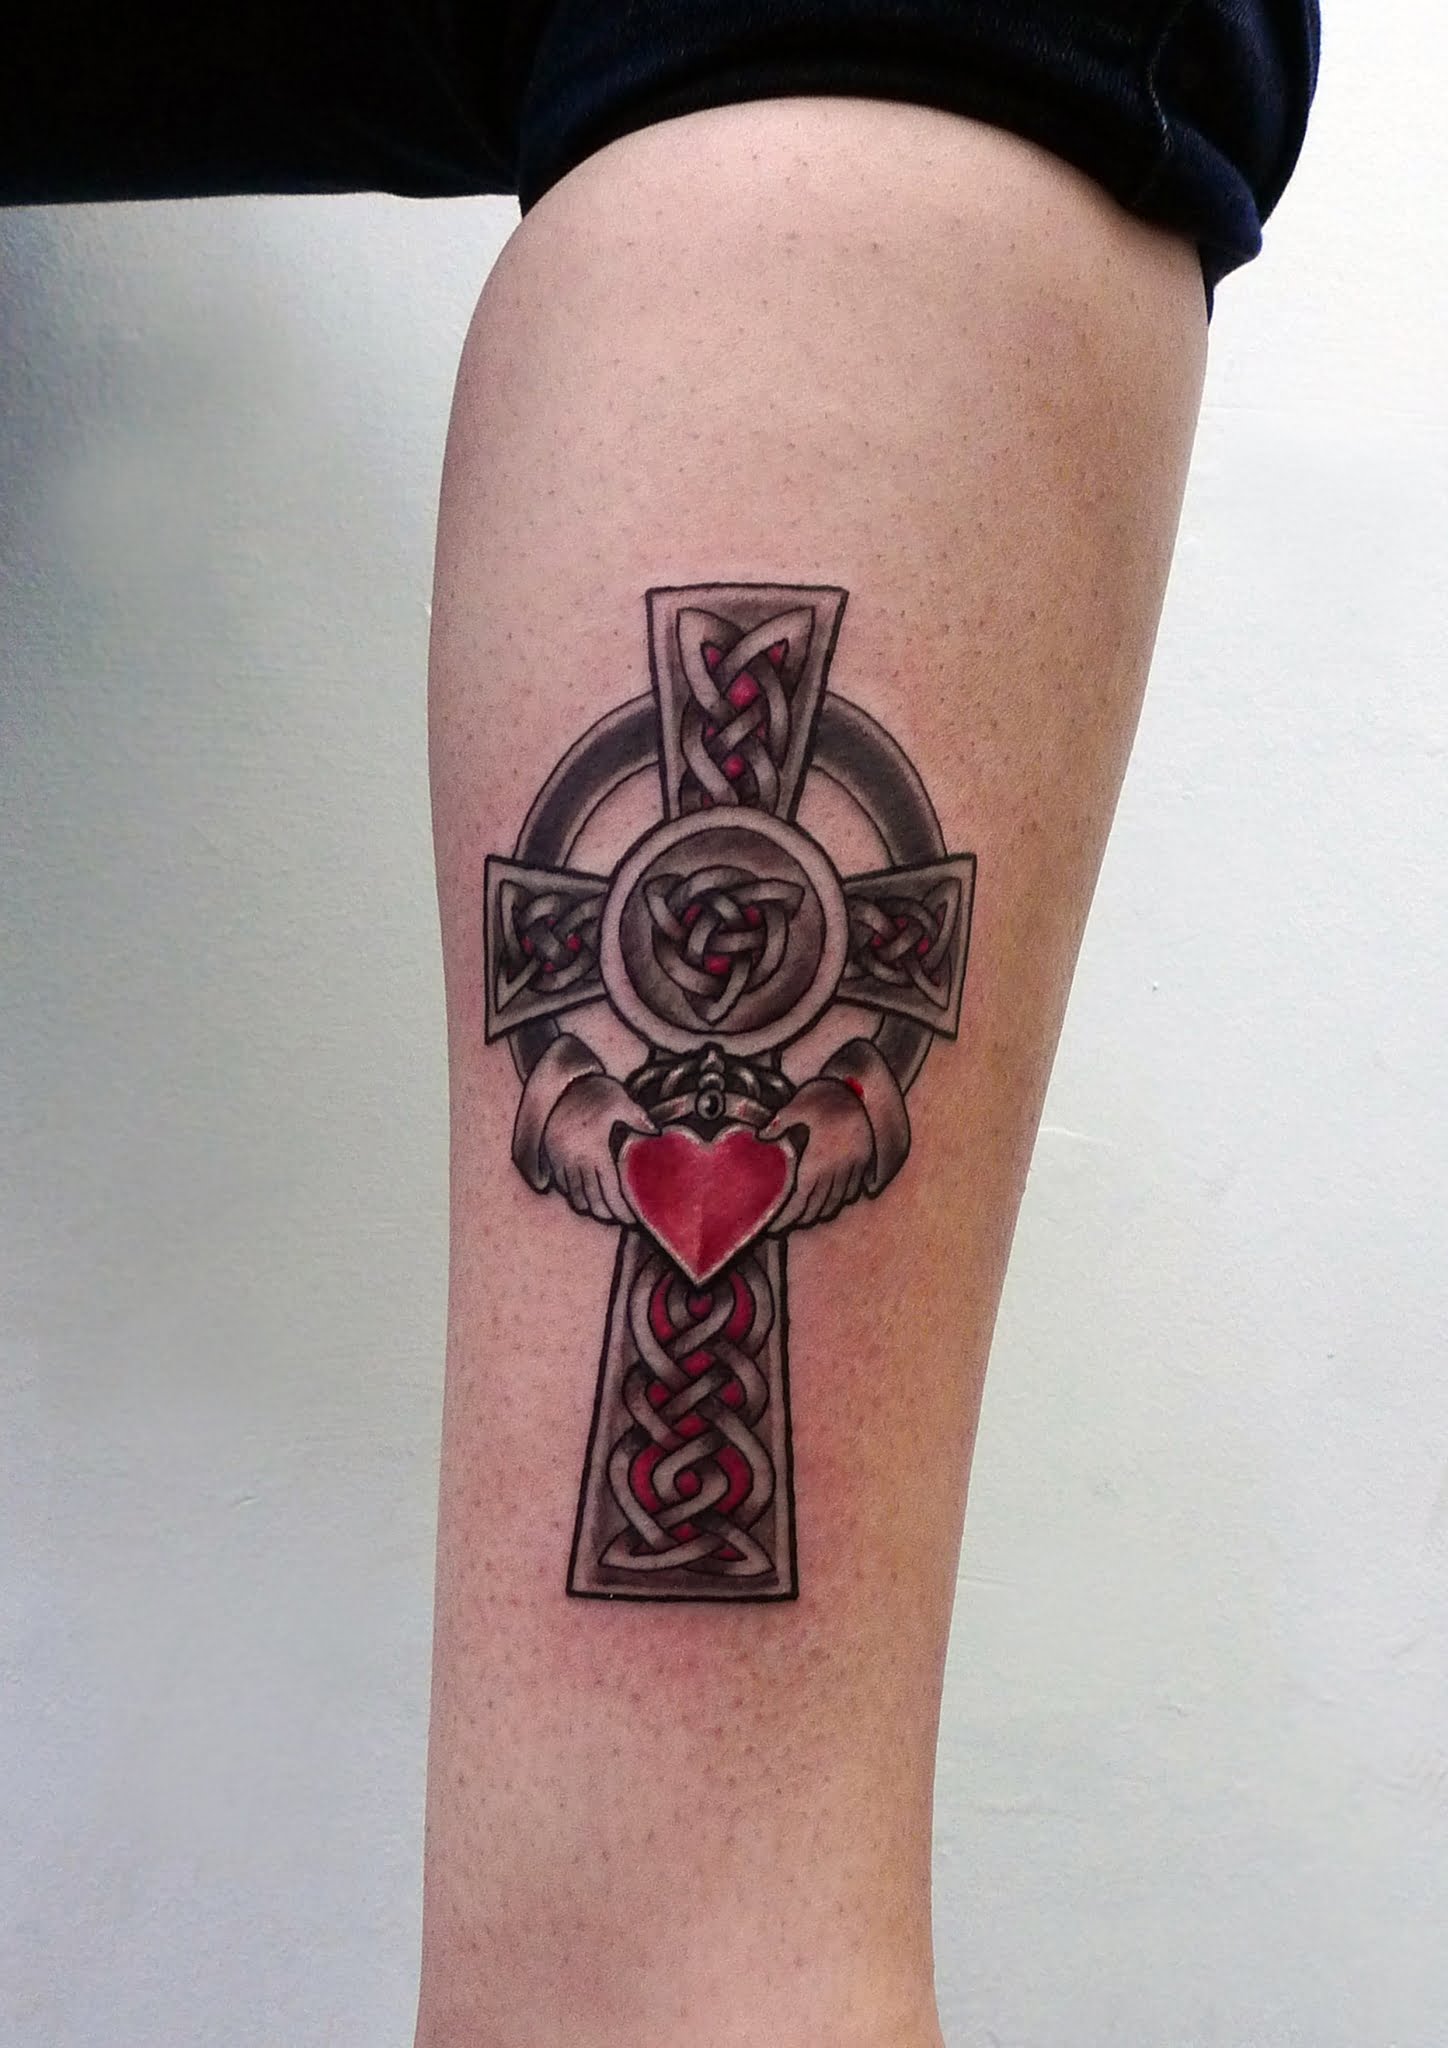 Cross tattoo design by whittysx on DeviantArt